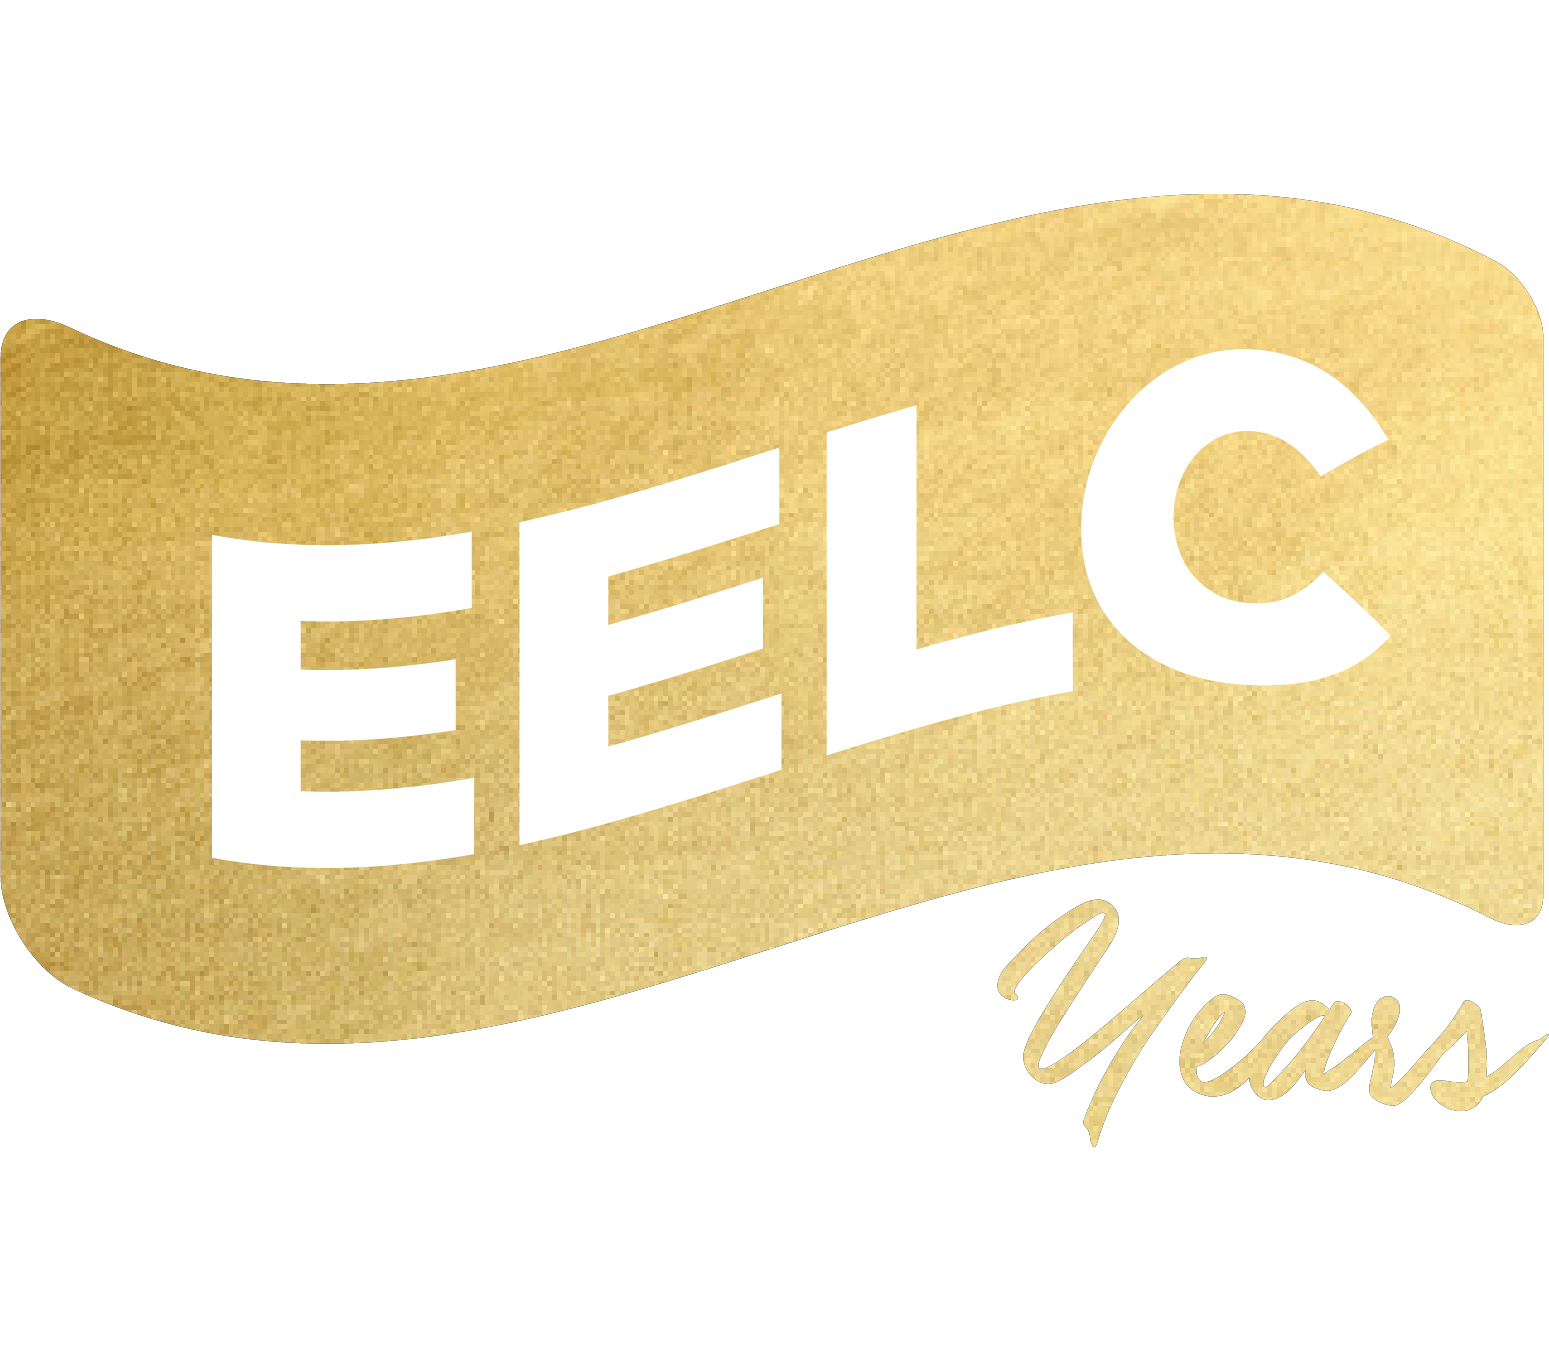 EELC Law Centre